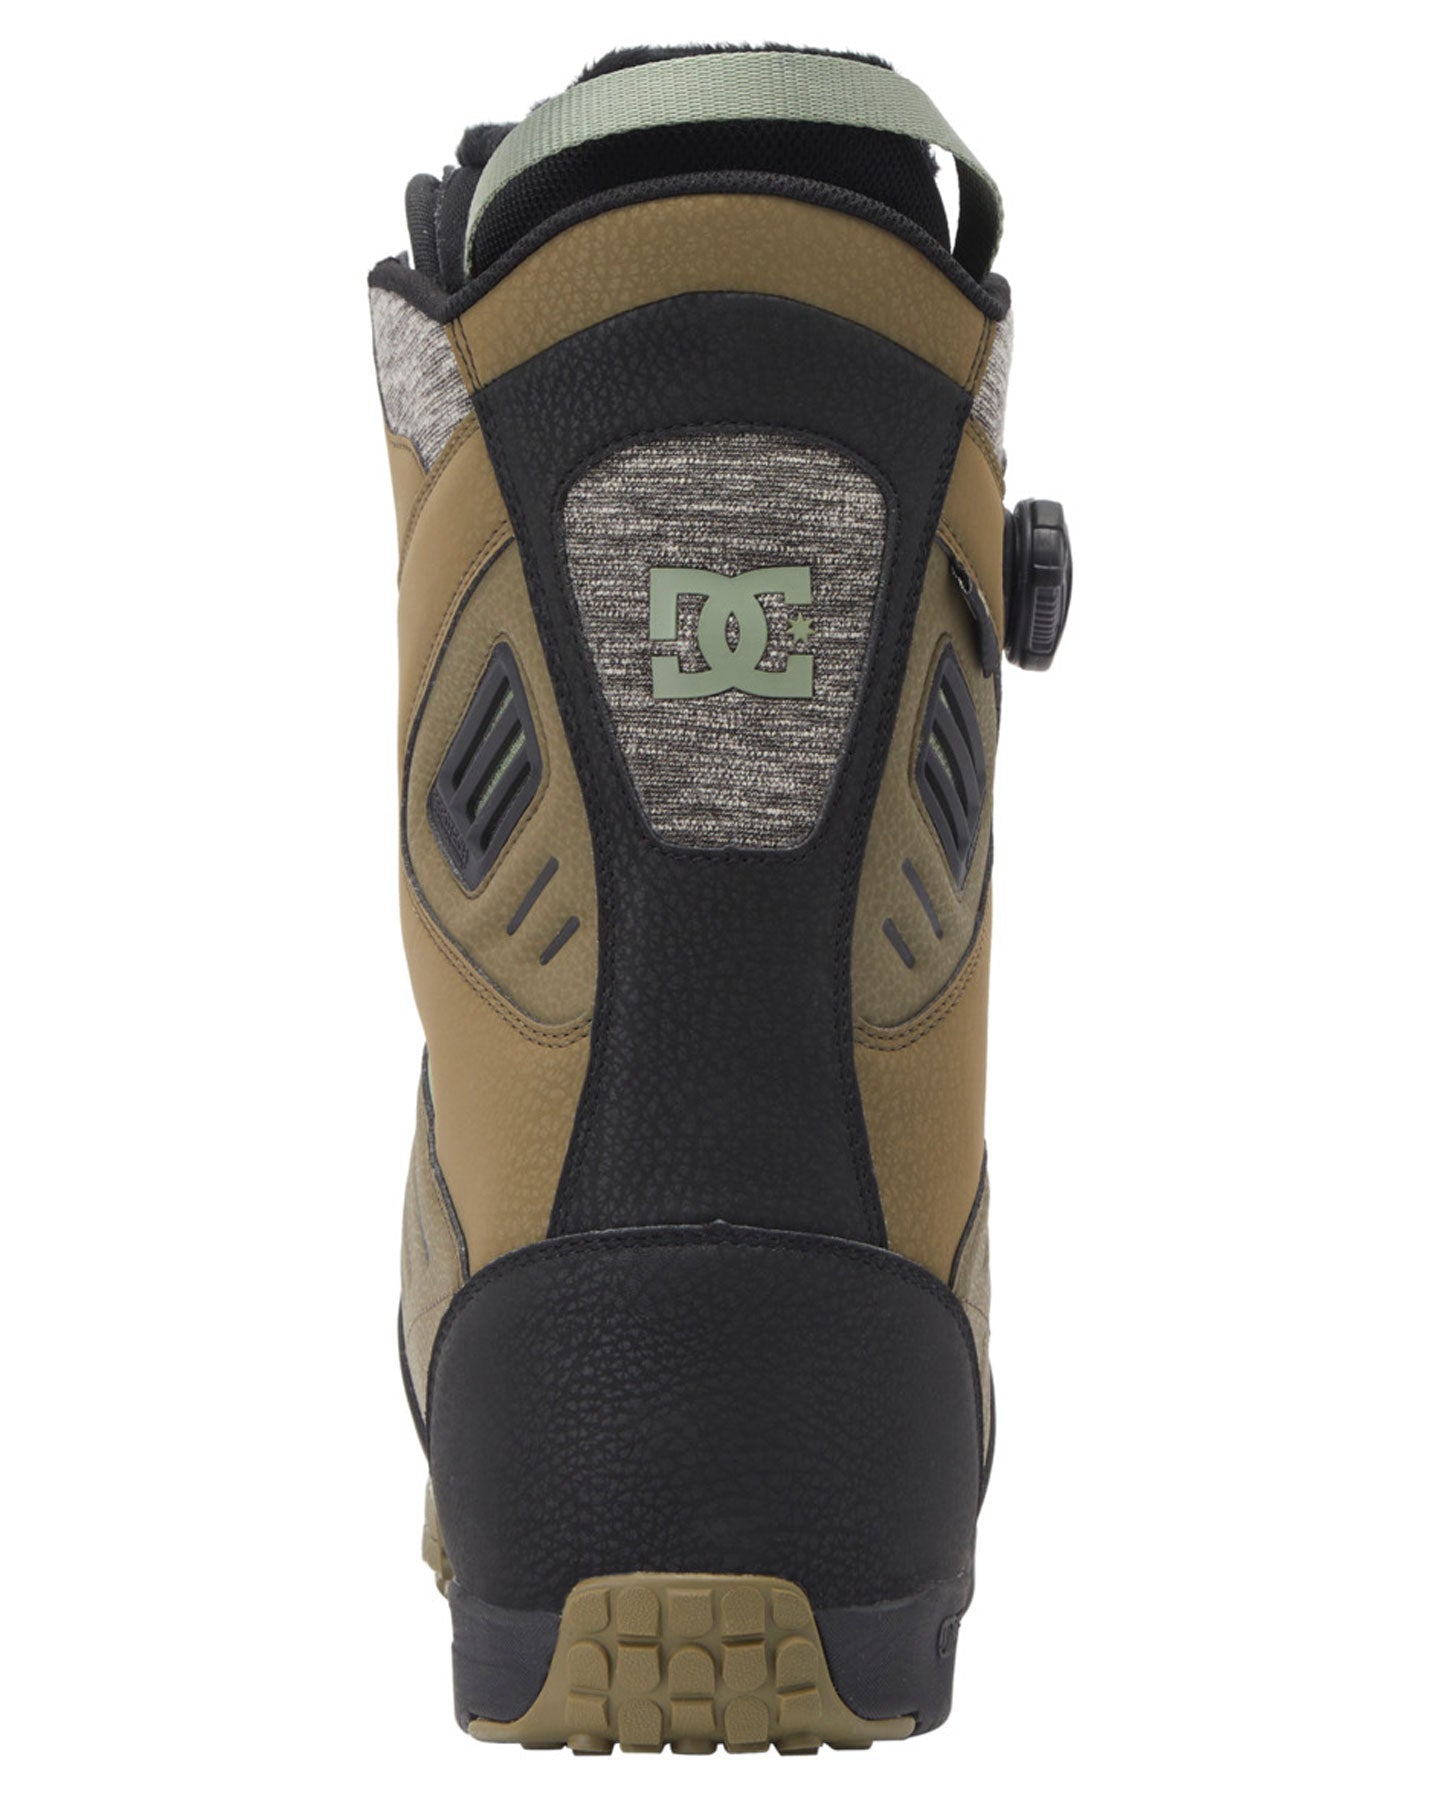 DC Judge Boa Snowboard Boots - Dark Olive Men's Snowboard Boots - SnowSkiersWarehouse